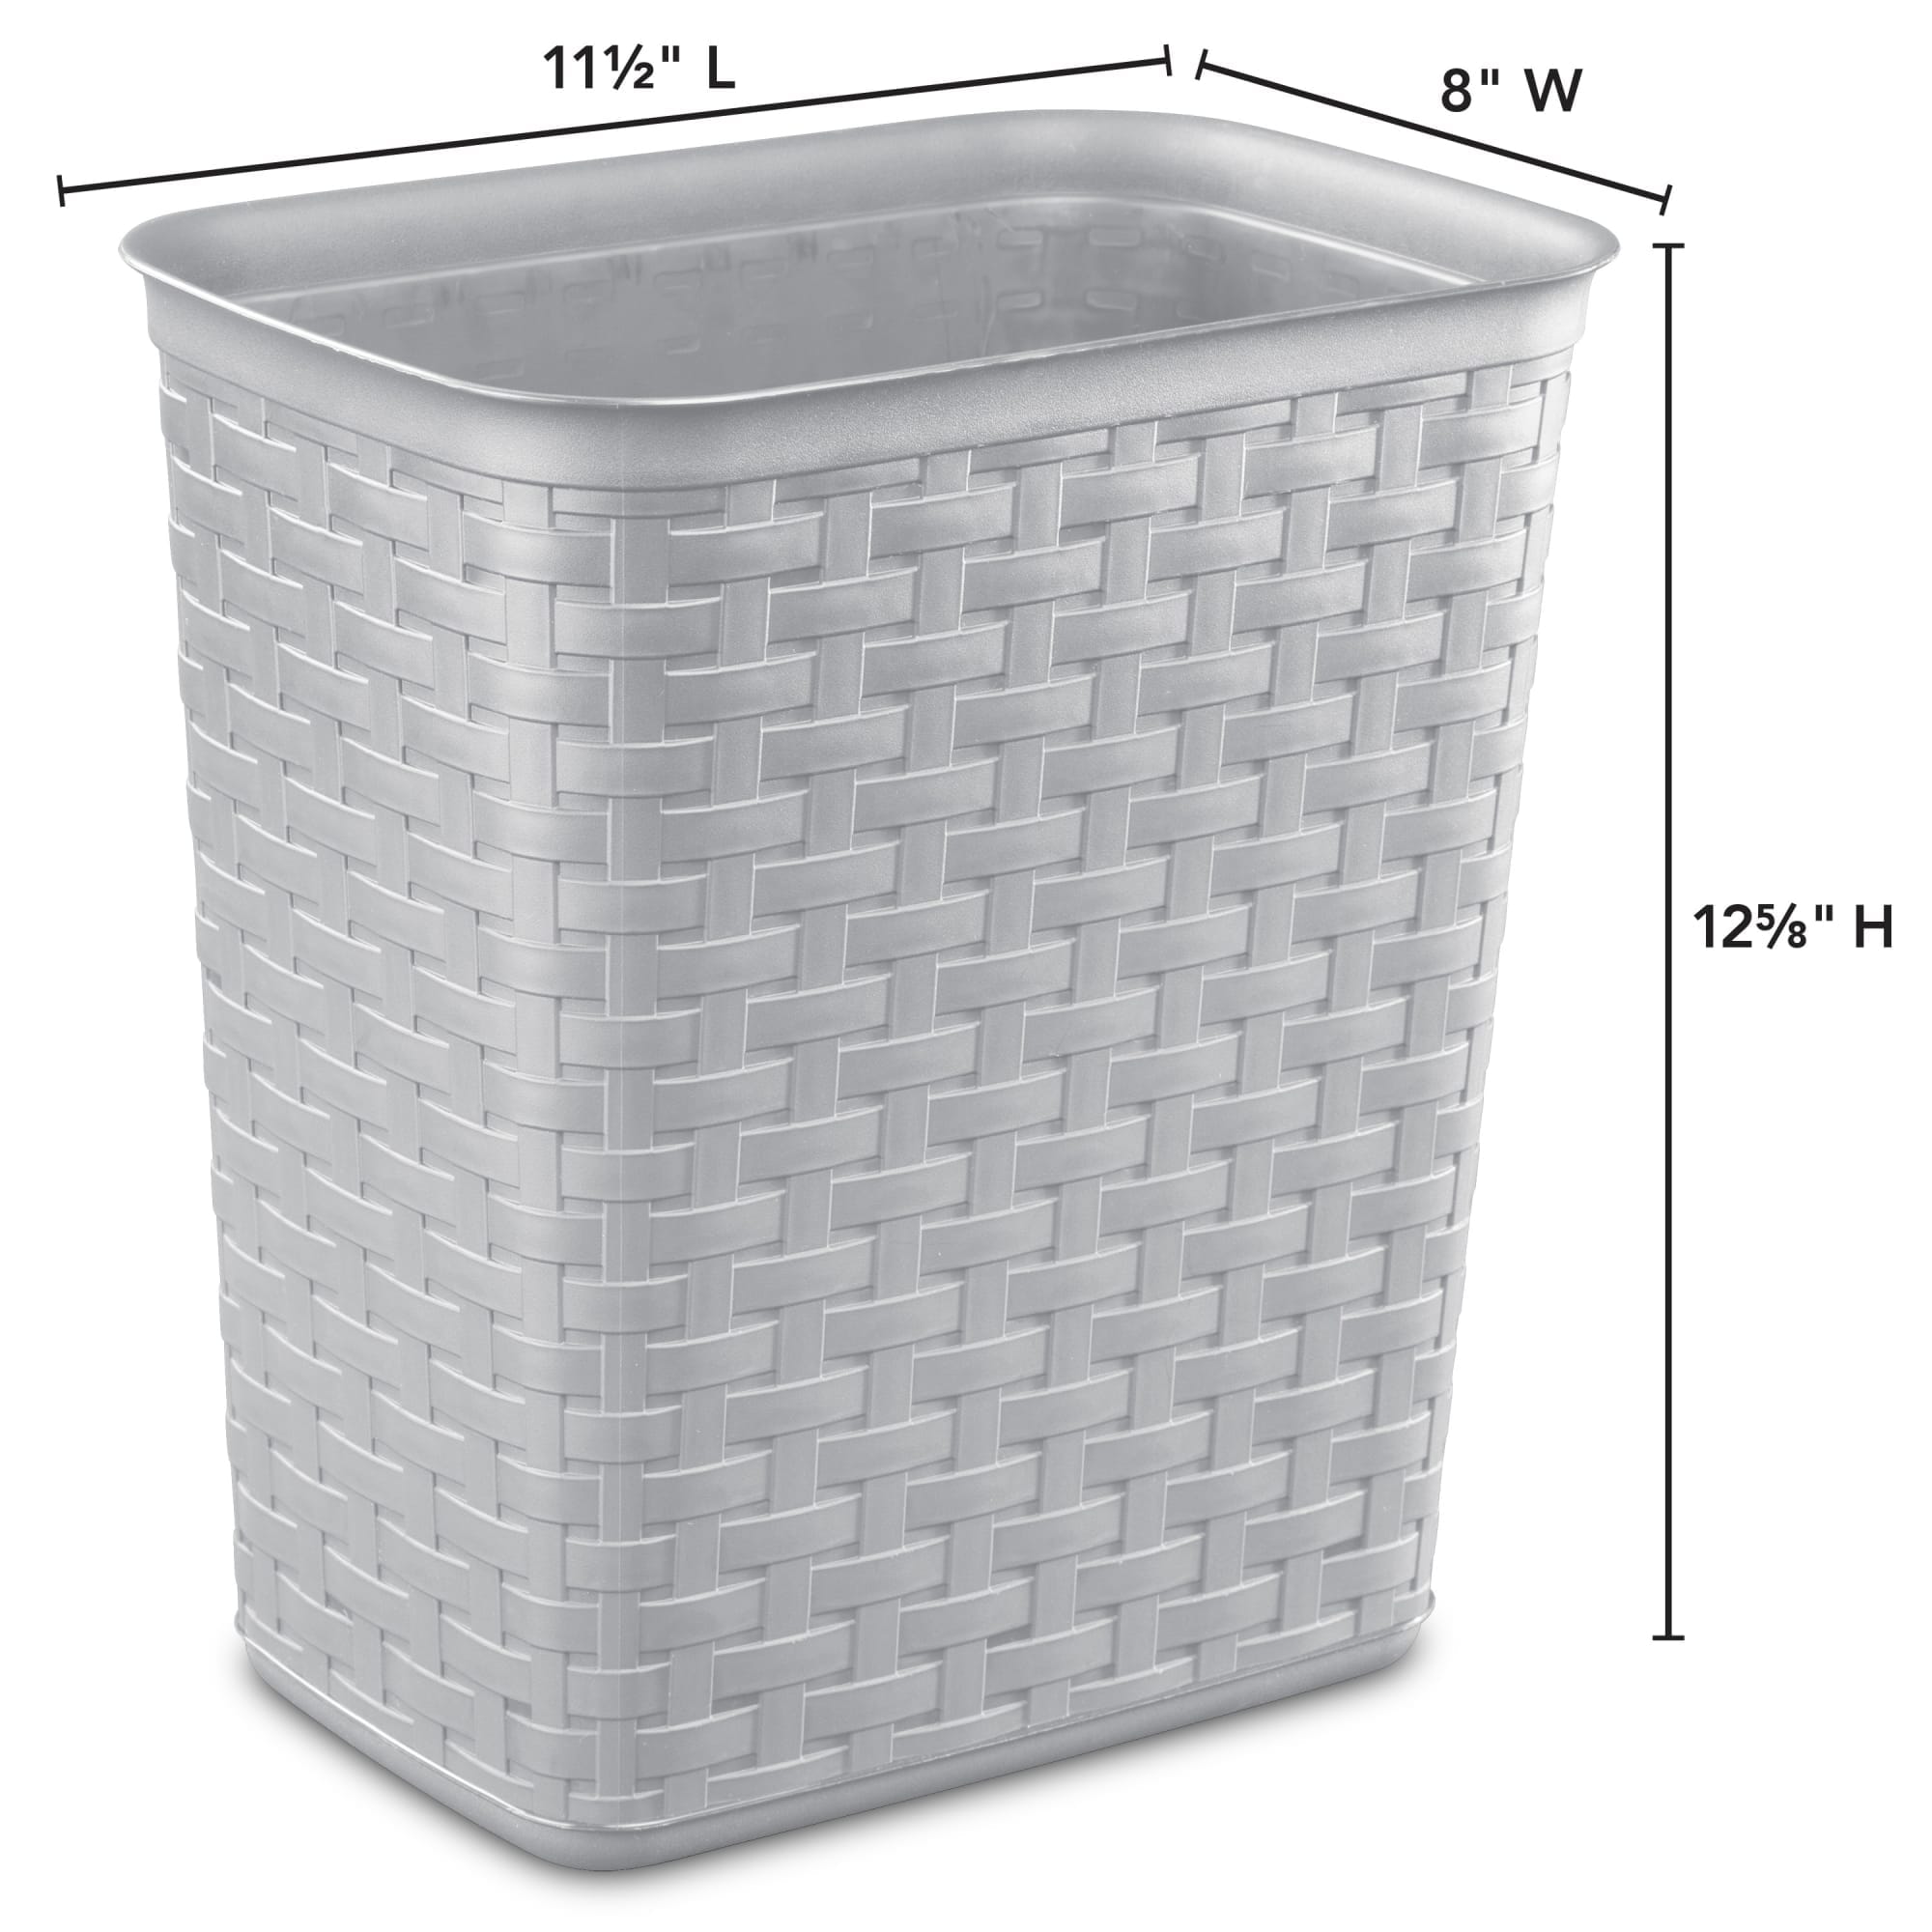 Sterilite 3.4 Gallon/13 Liter Weave Wastebasket Cement $6.00 EACH, CASE PACK OF 6